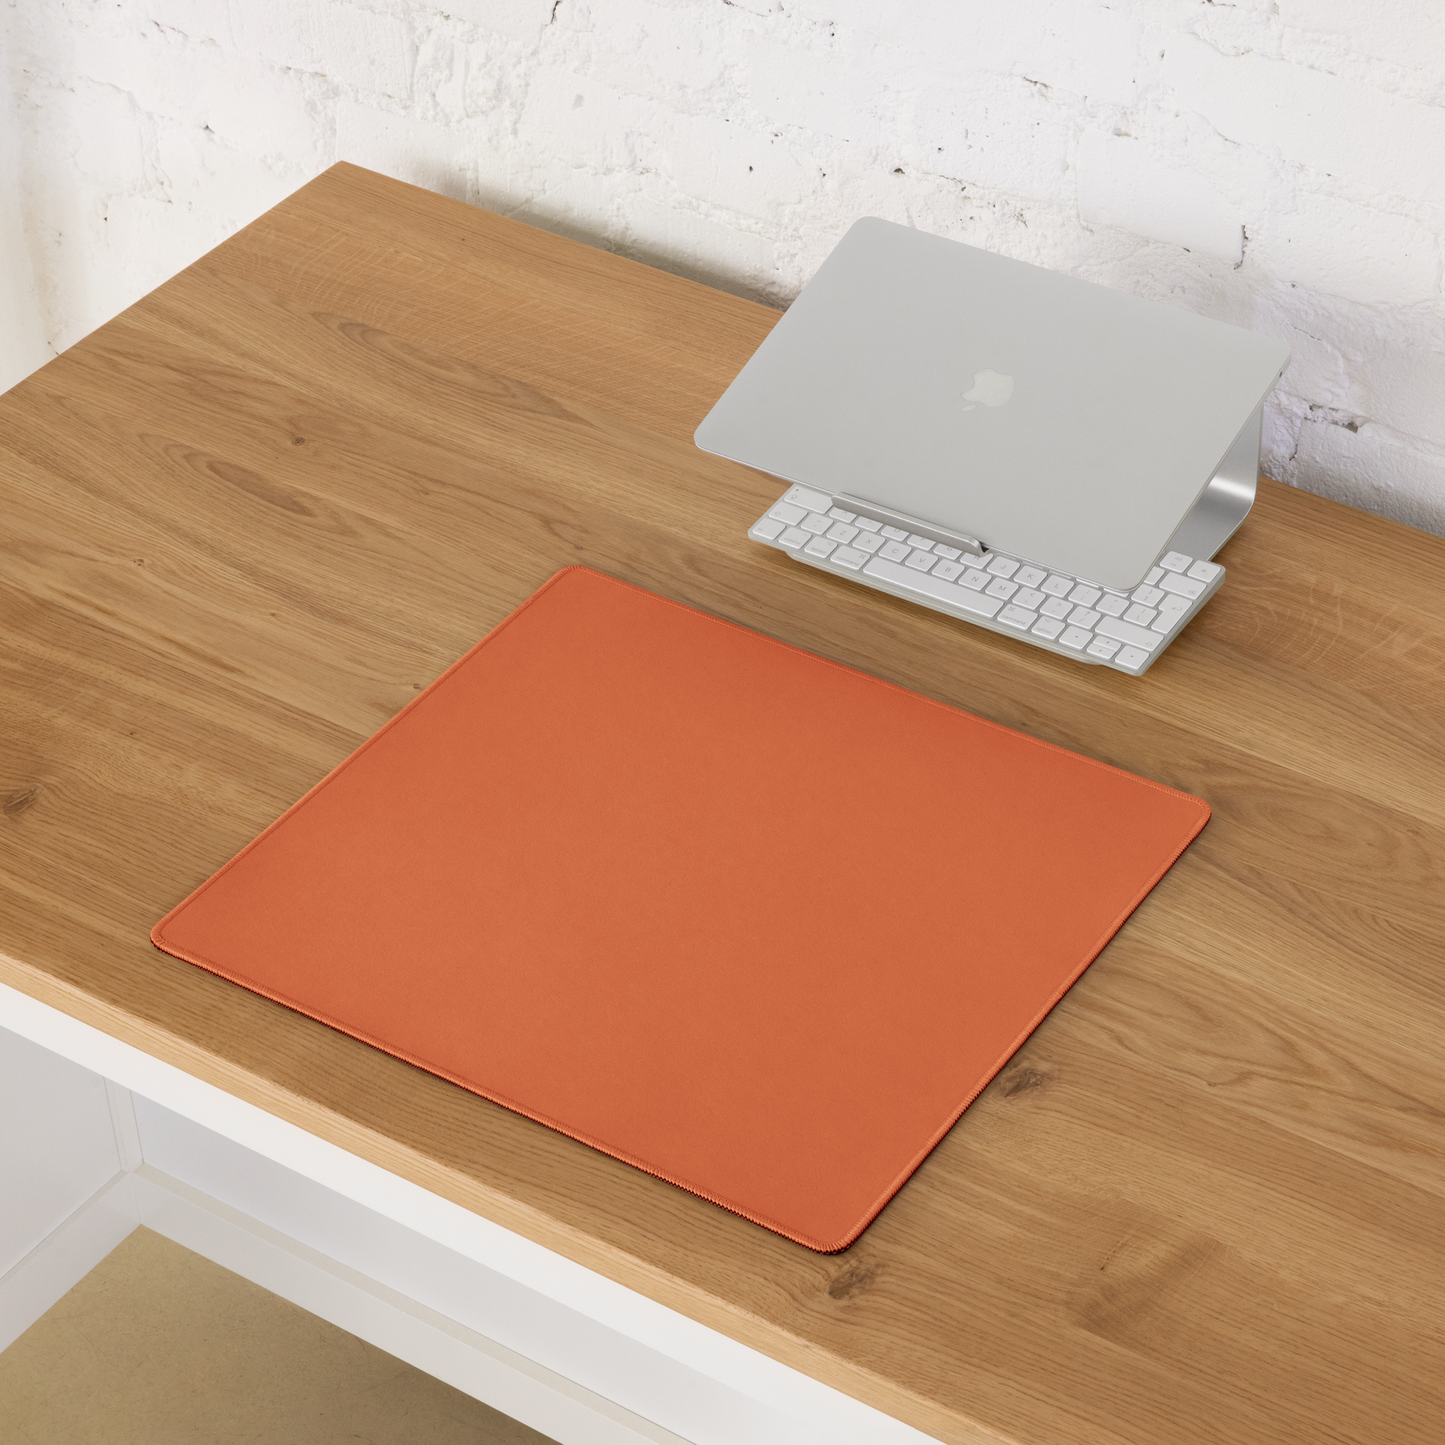 Orange Desk Pad -  Pantone 164